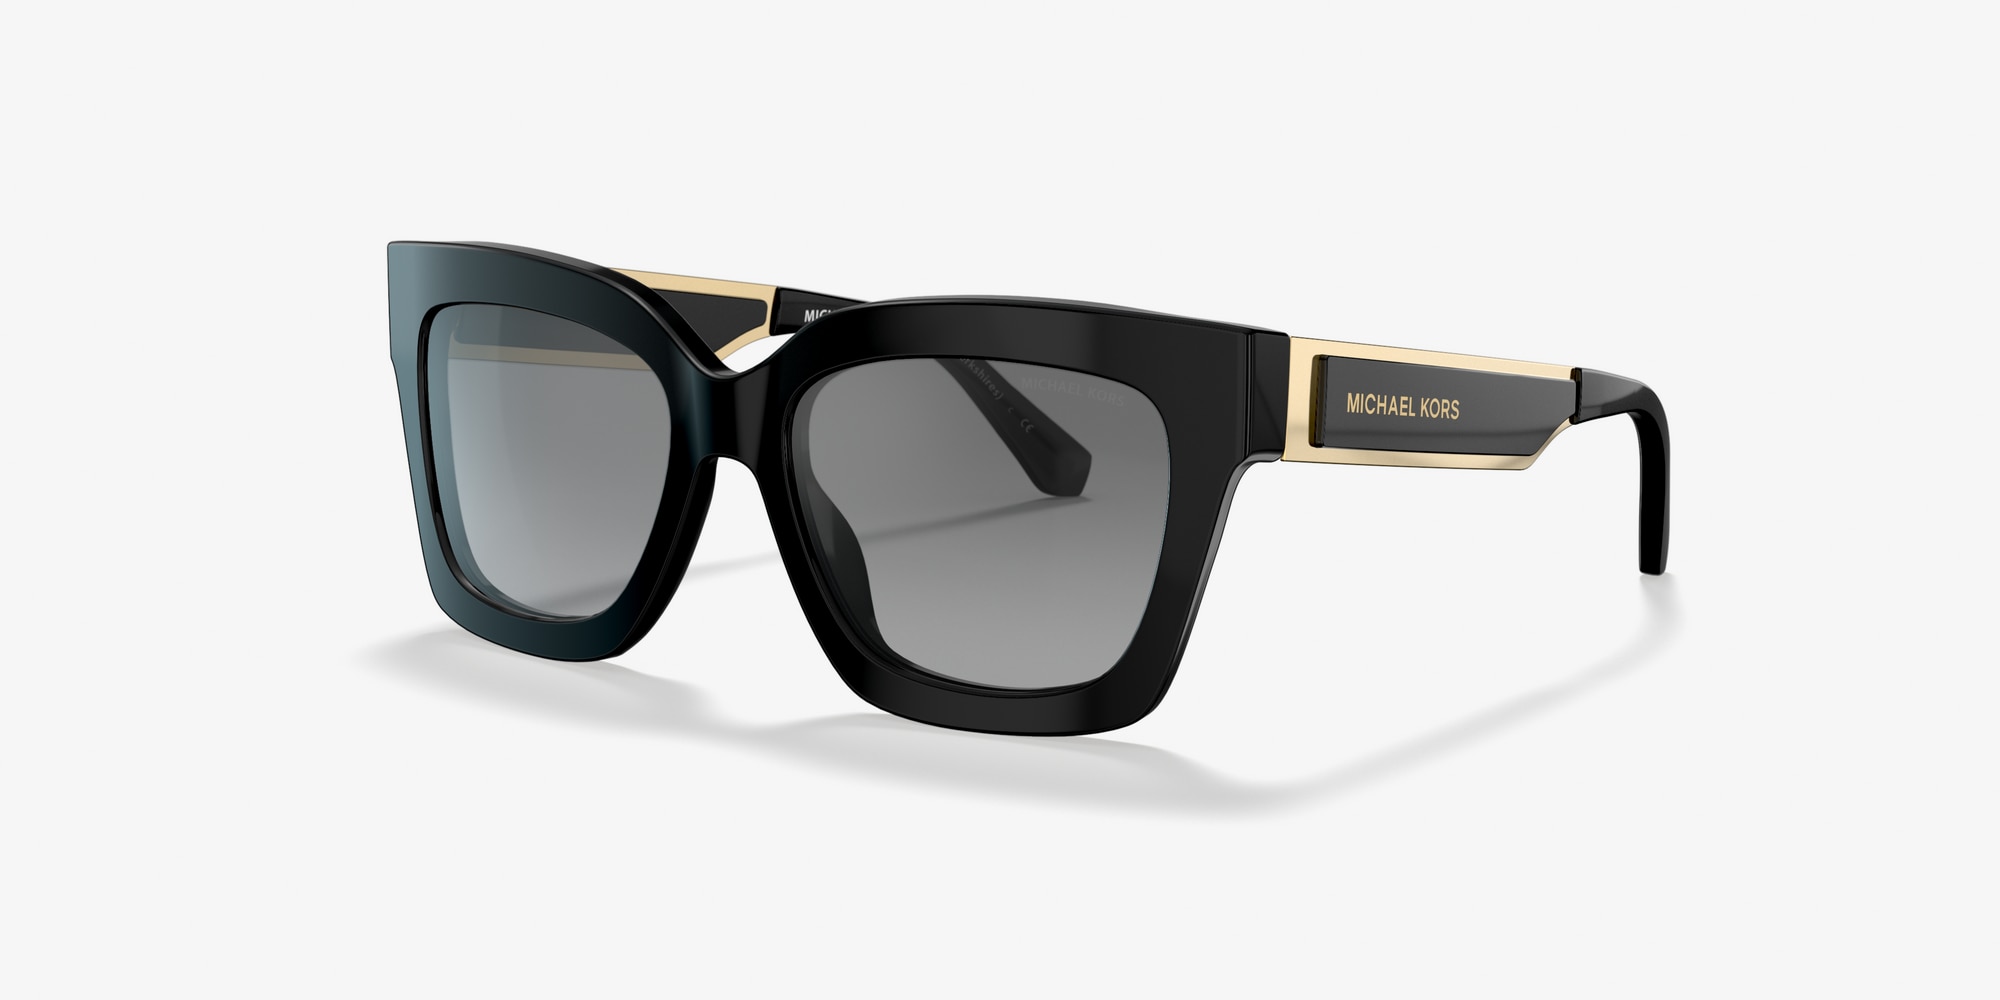 Michael Kors Square Gradient Sunglasses  Black Sunglasses Accessories   MIC217717  The RealReal